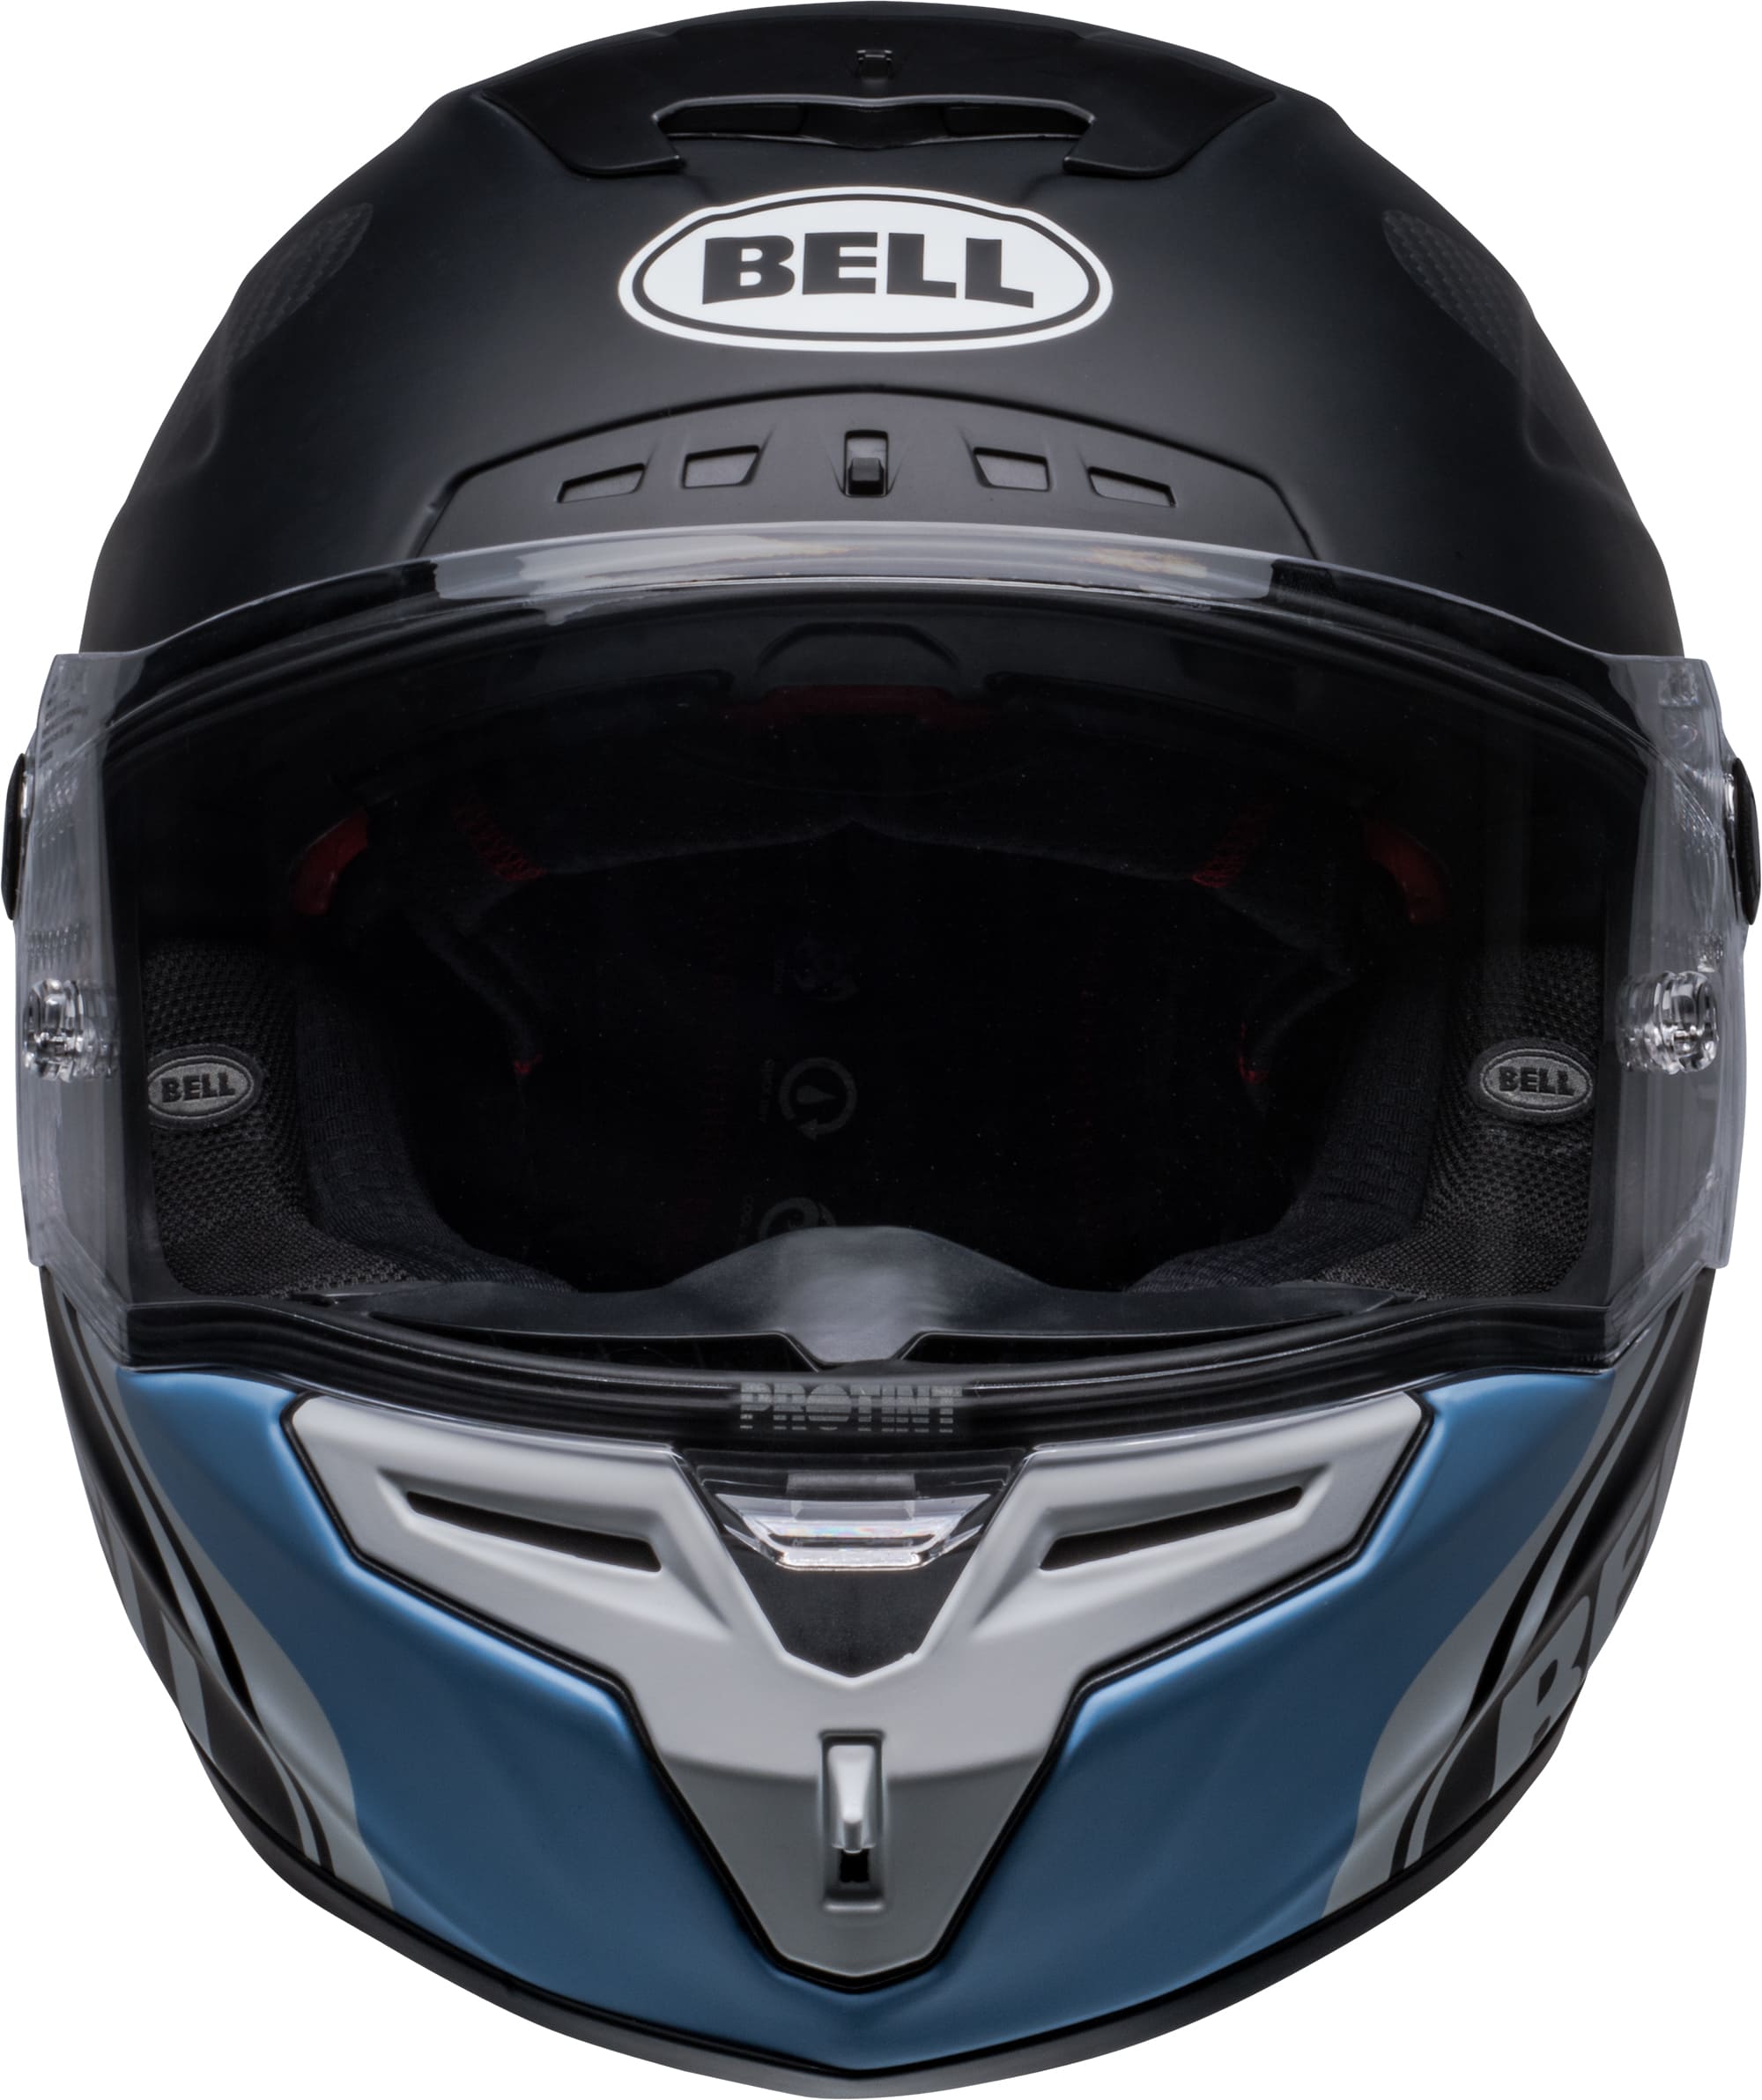 Bell Race Star Dlx Flex Hello Cousteau Algae Matt Black Blue Bell Helmets At Two Wheel